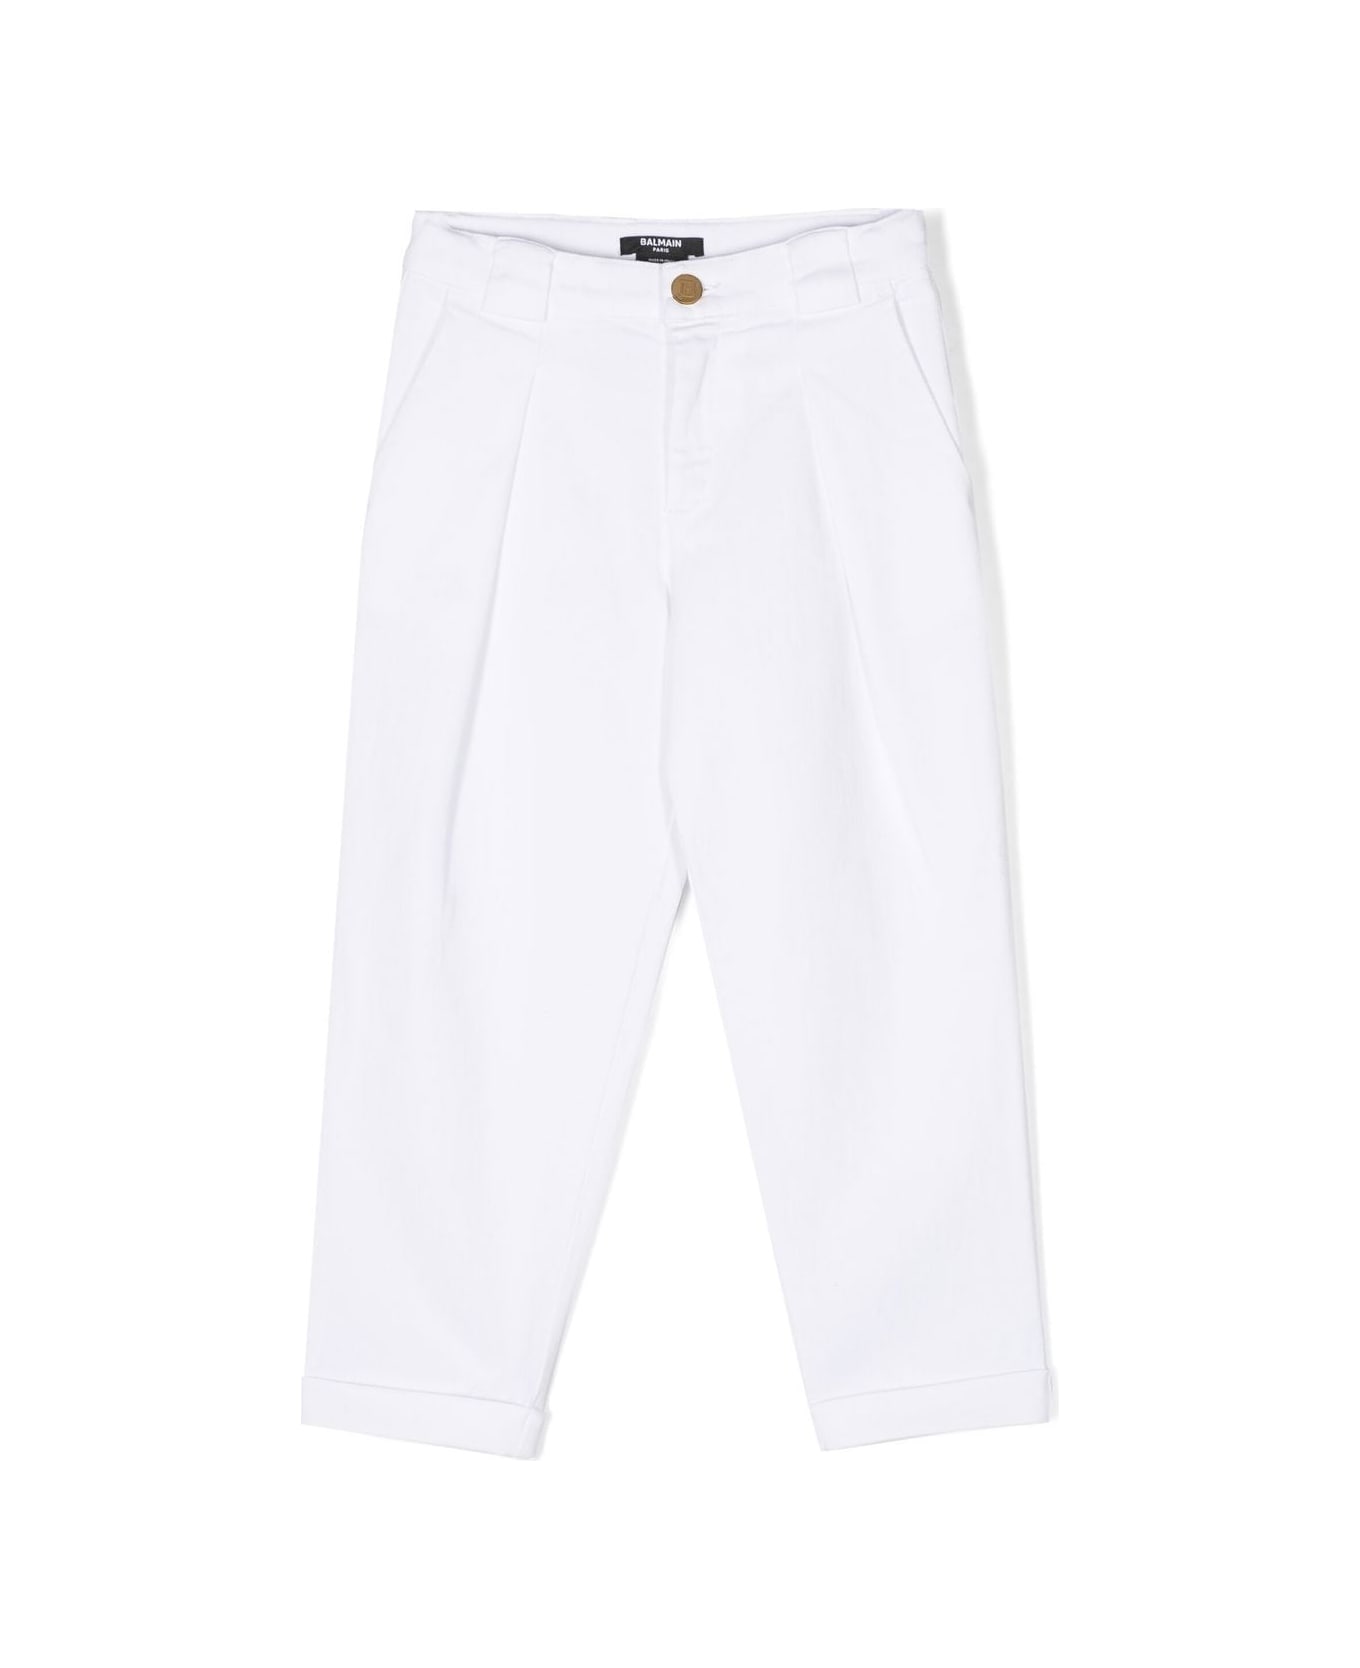 Balmain White Cotton Pants - White